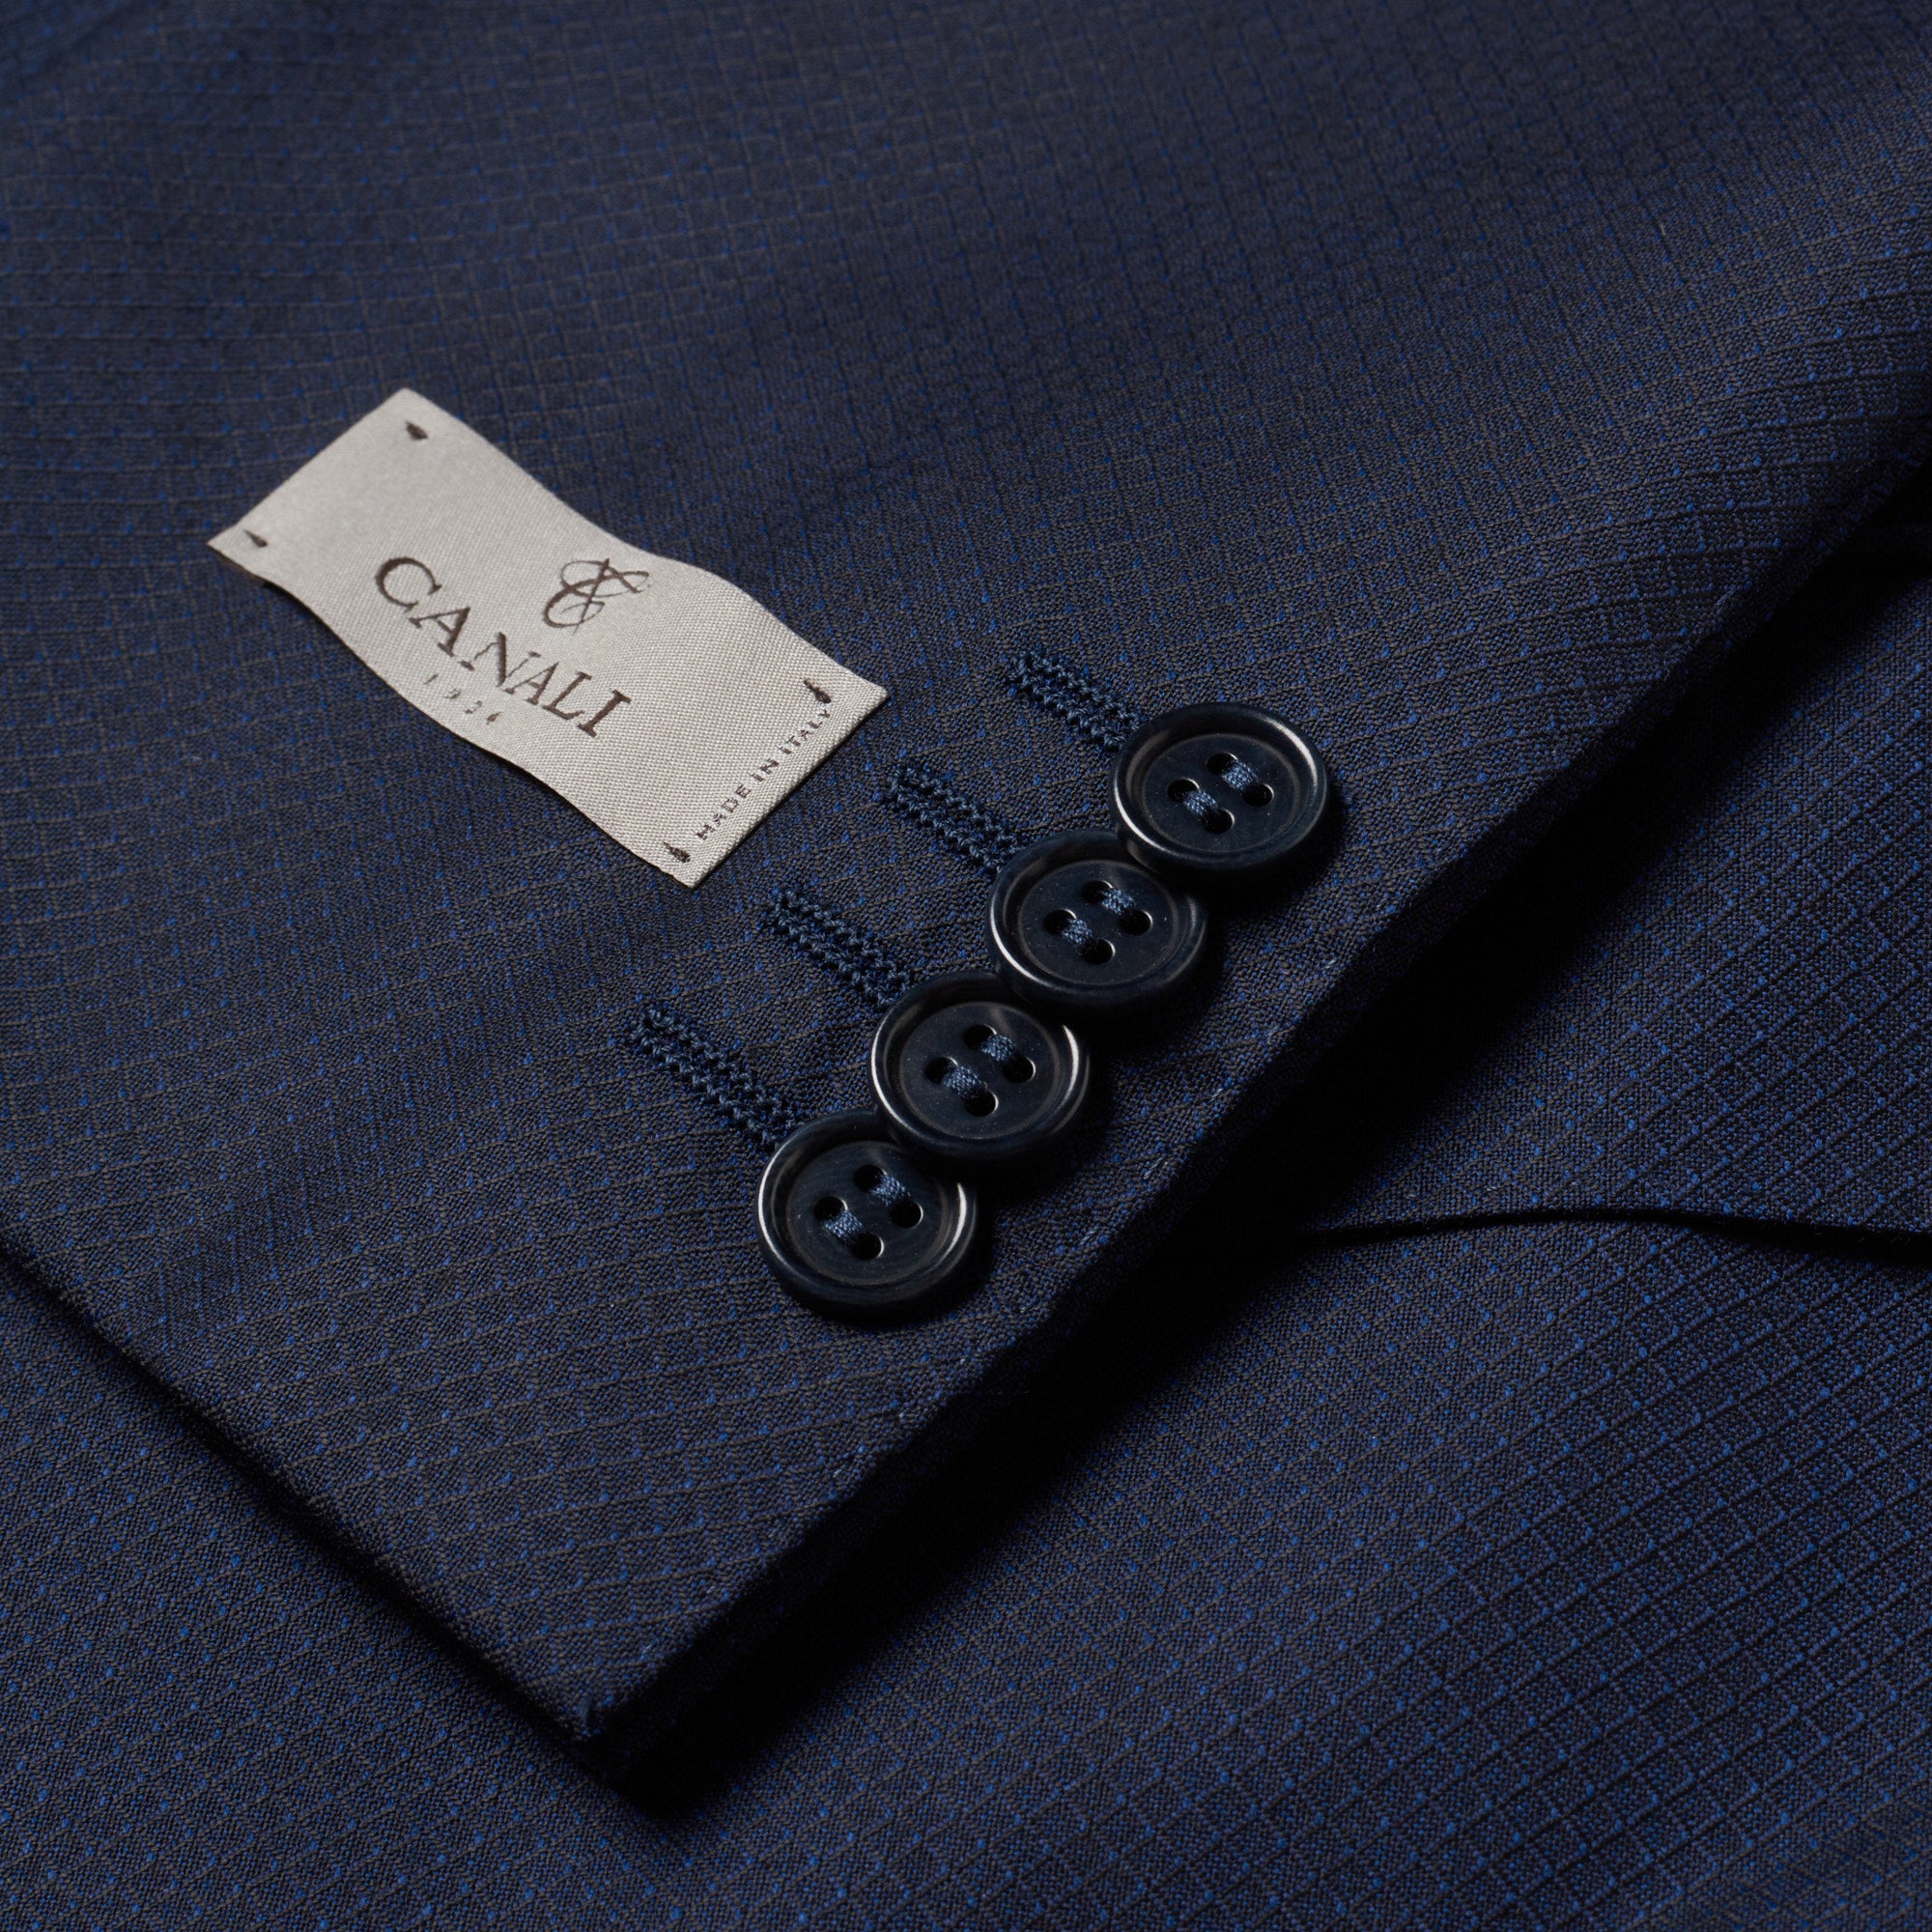 CANALI 1934 Navy Blue Wool Suit EU 50 NEW US 40 Regular Slim Fit Cut